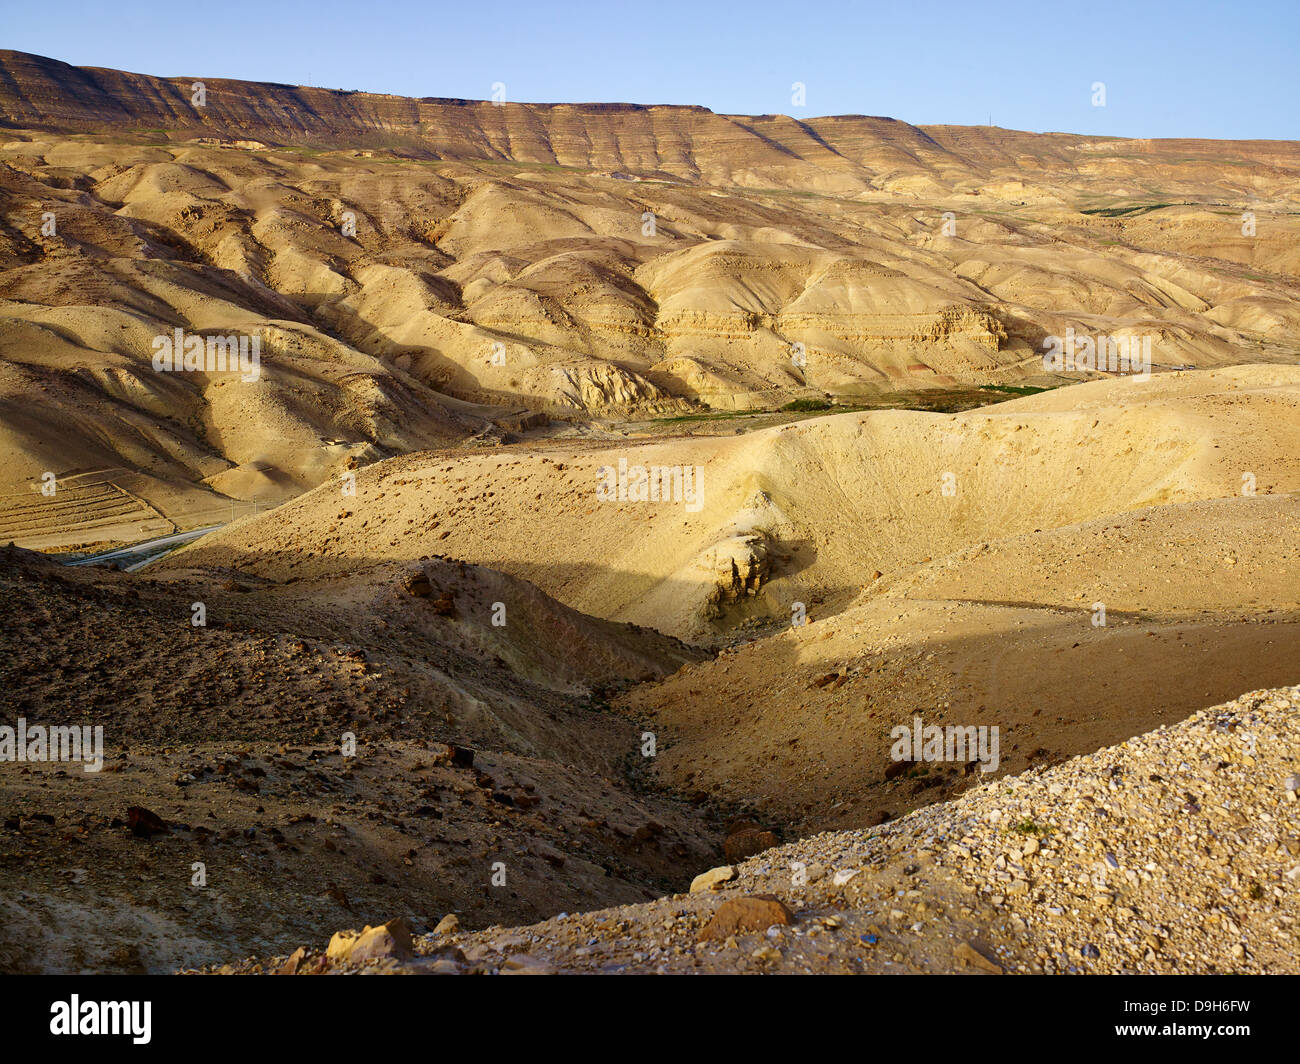 Wadi al Hasa with Tannur dam, Karak/ Tafilah Province, Jordan, Middle East  Stock Photo - Alamy